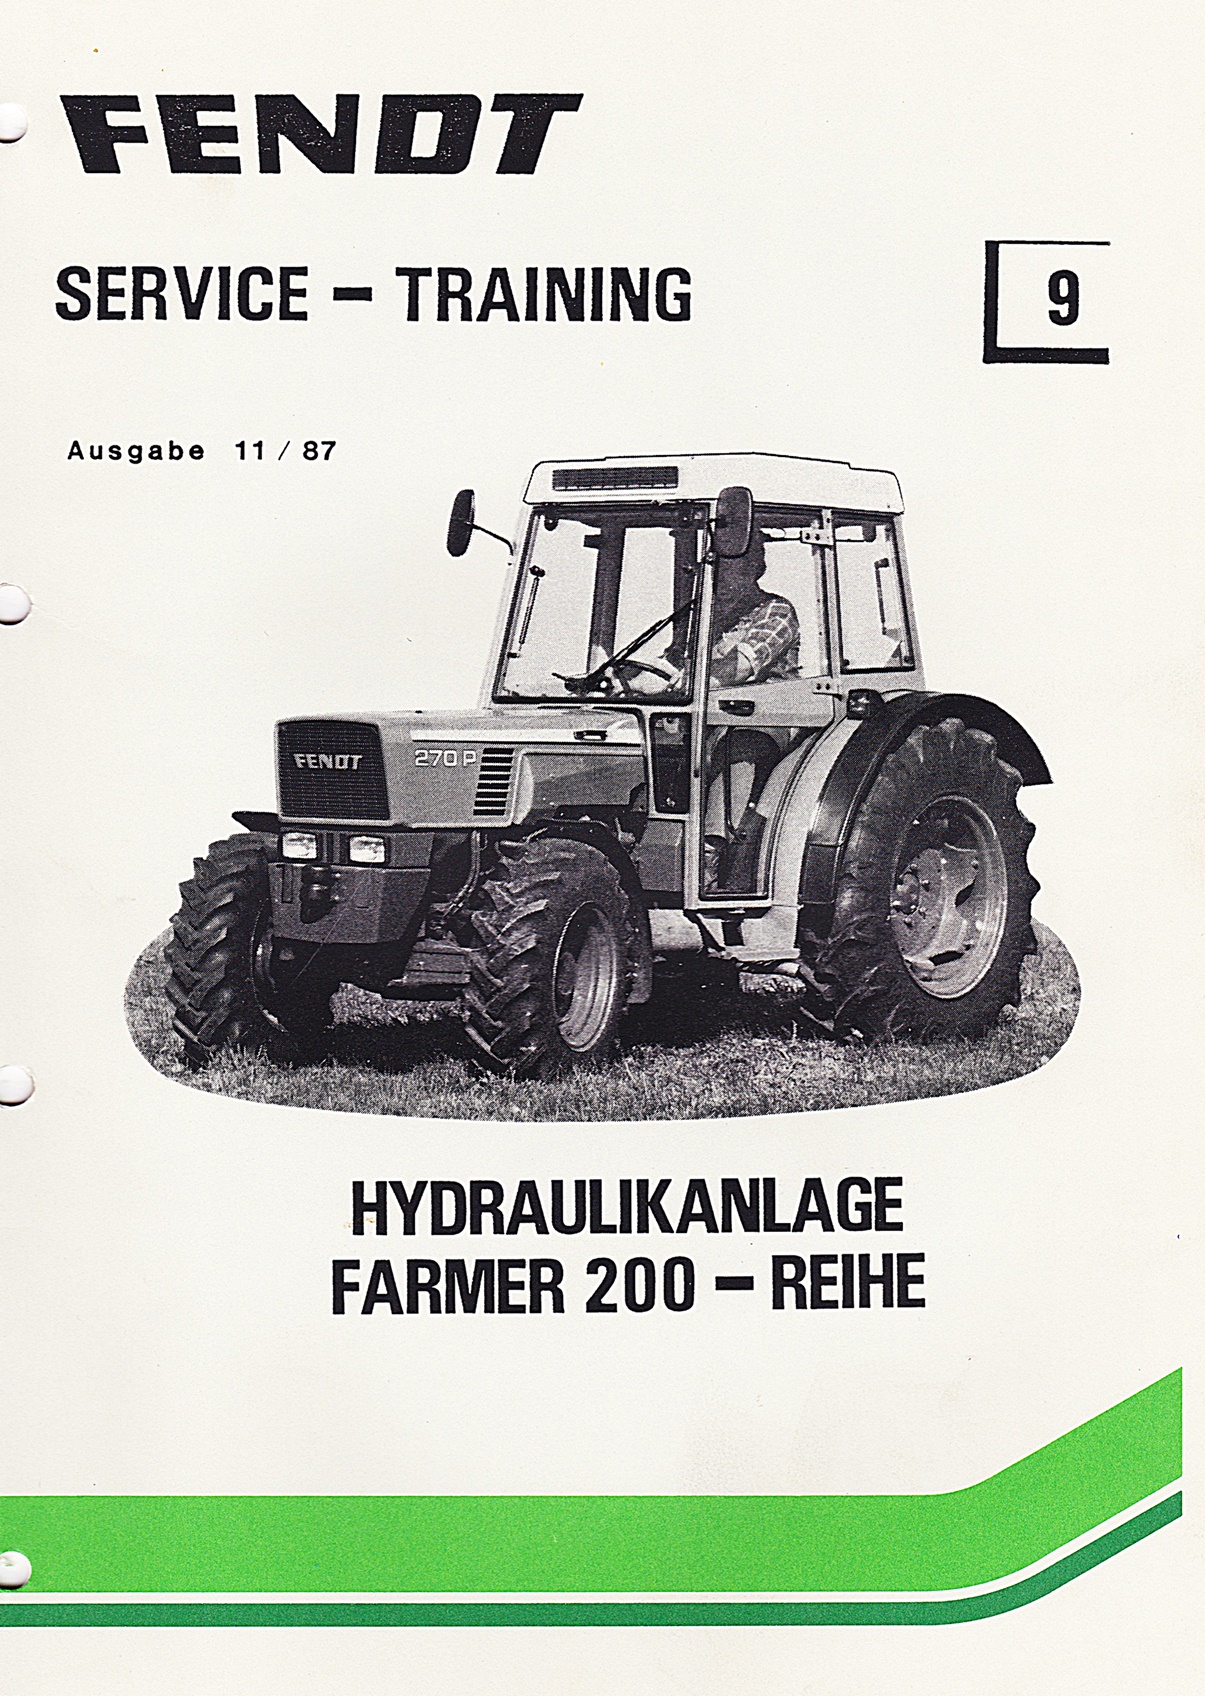 Fendt  Service und Training Nr. 9, Farmer 200 - Reihe